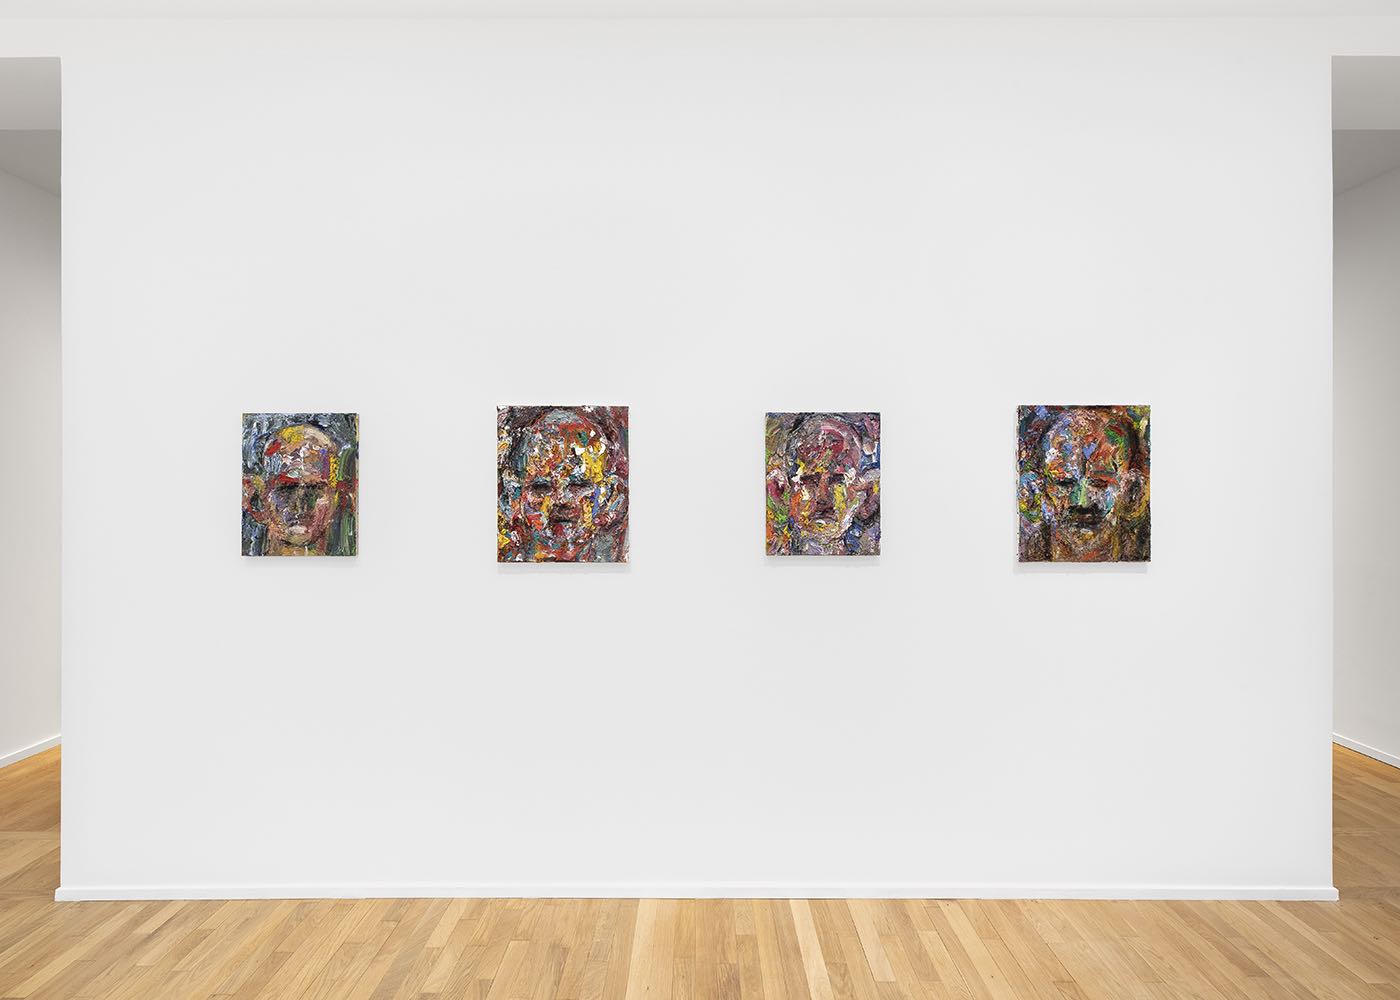 A day longer. Jim Dine in mostra alla Galerie Templon di Parigi